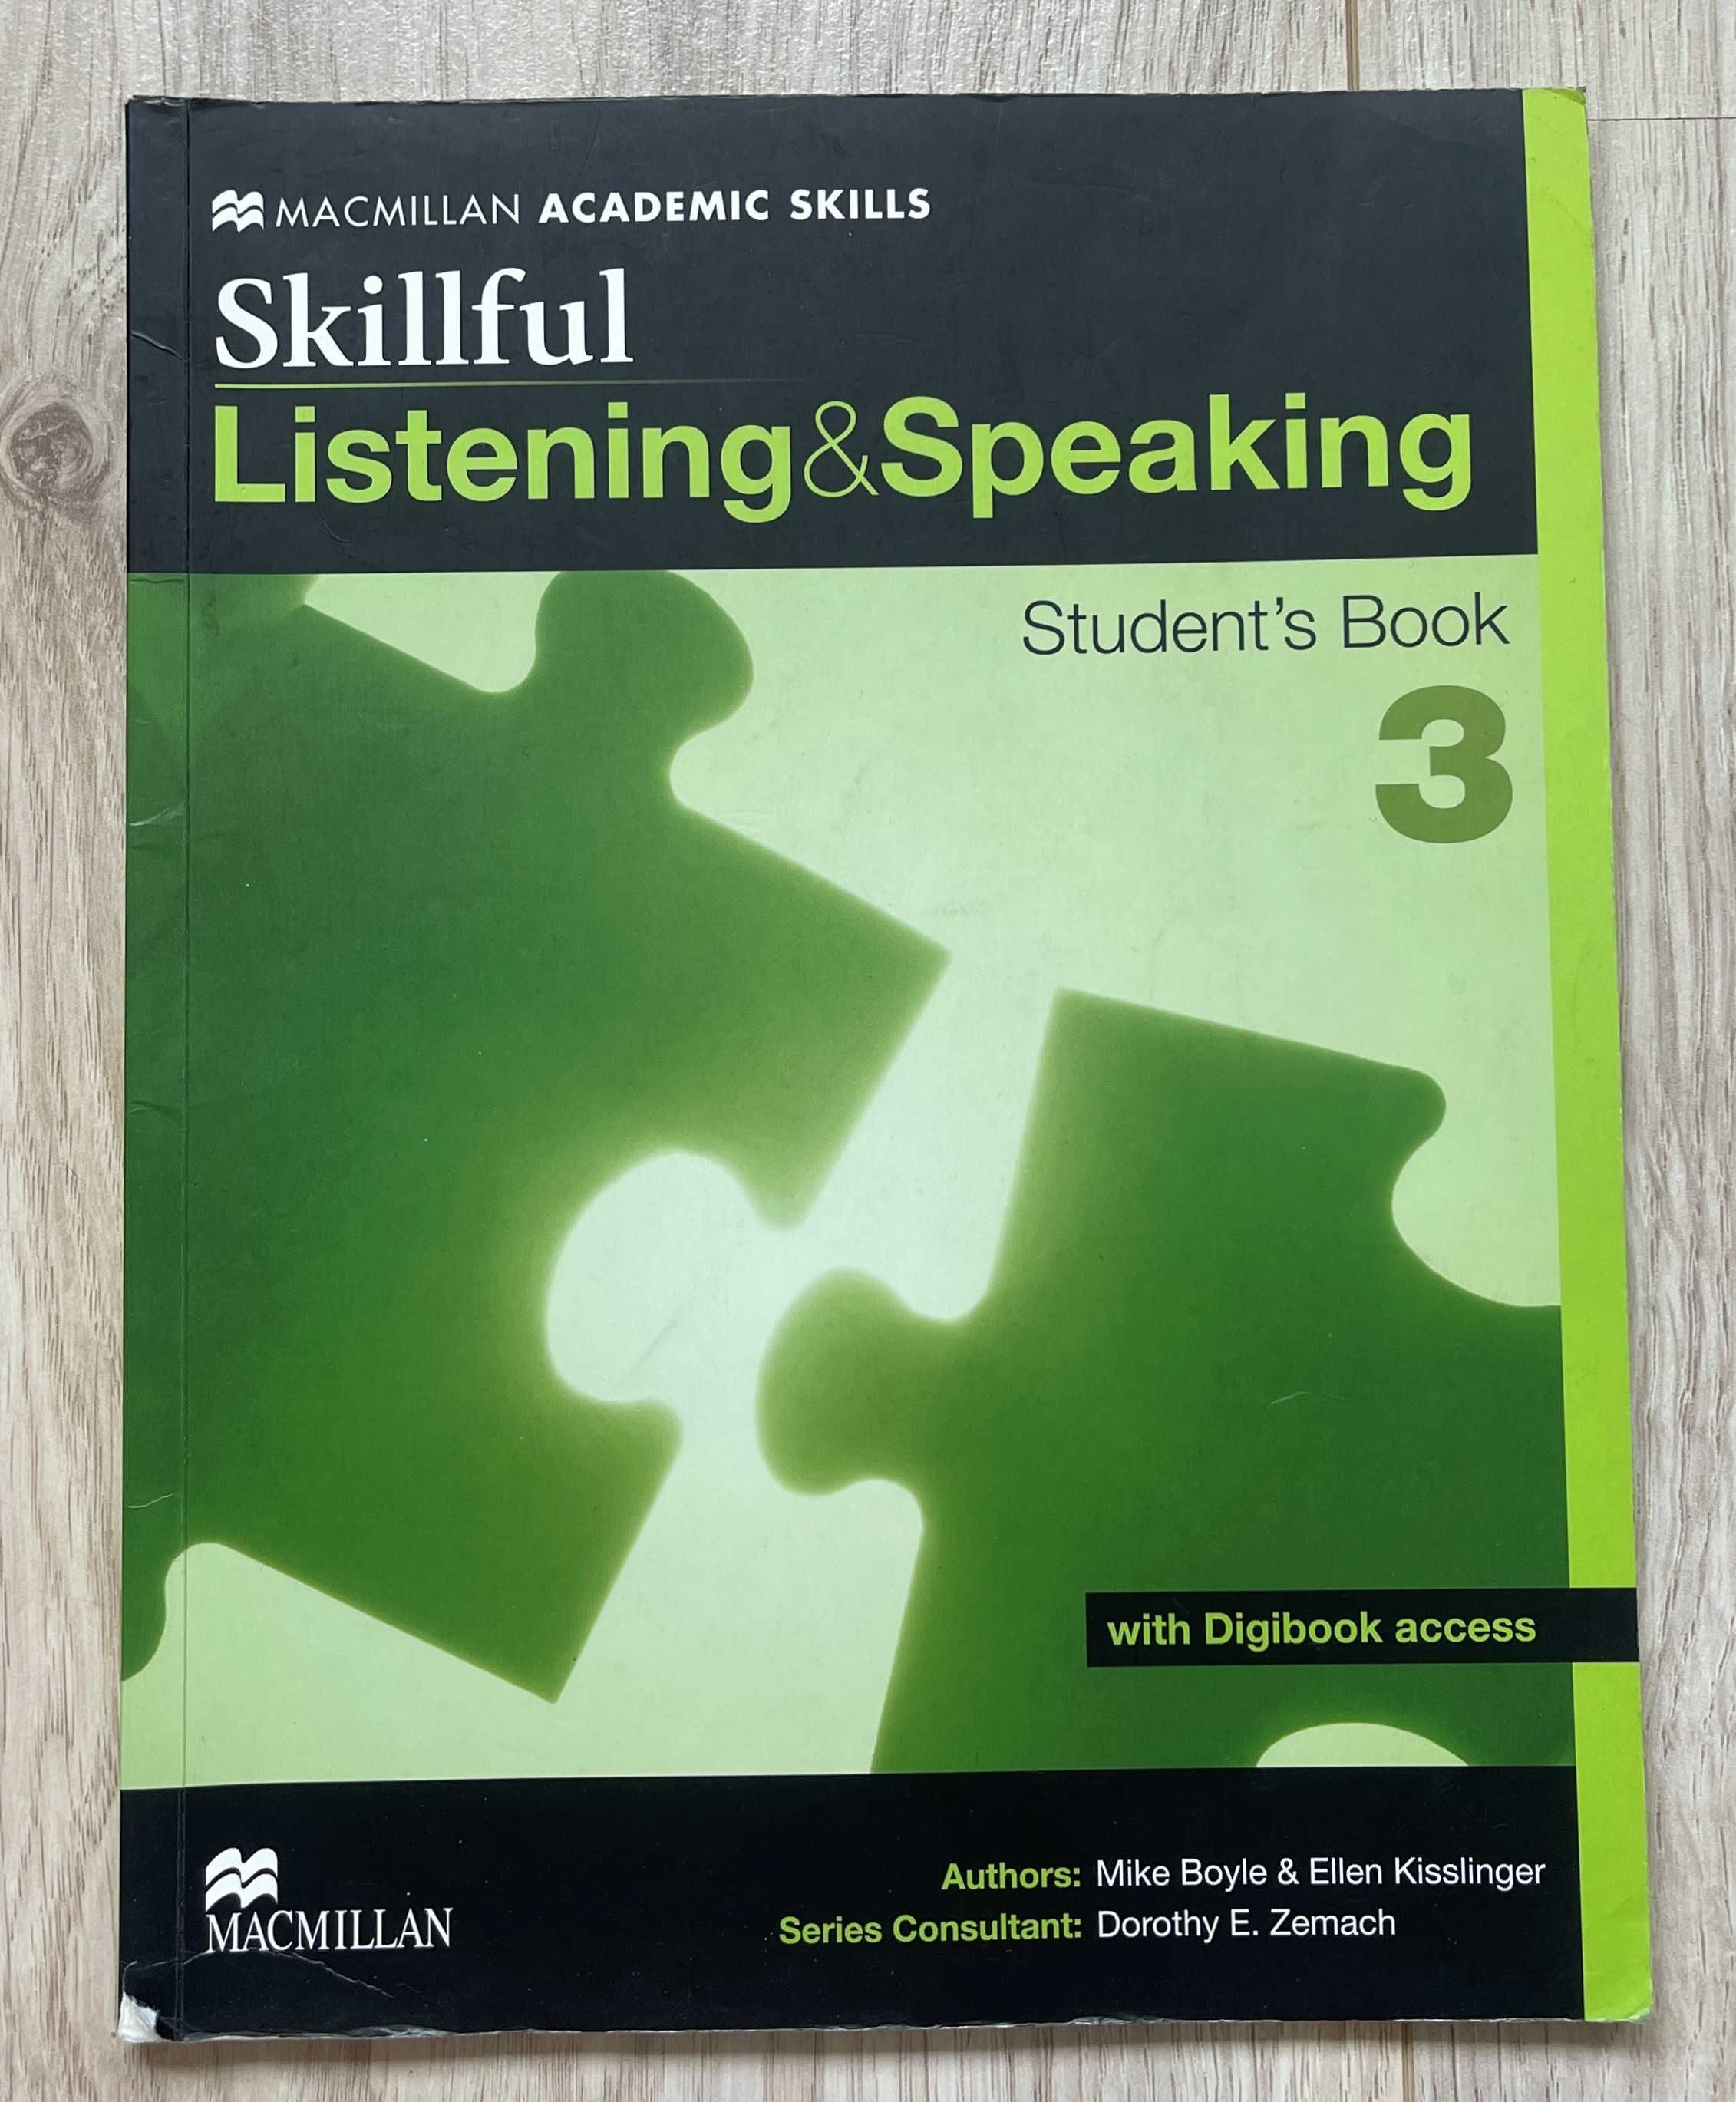 Skillful Listening & Speaking Student's Book 3 Macmillan